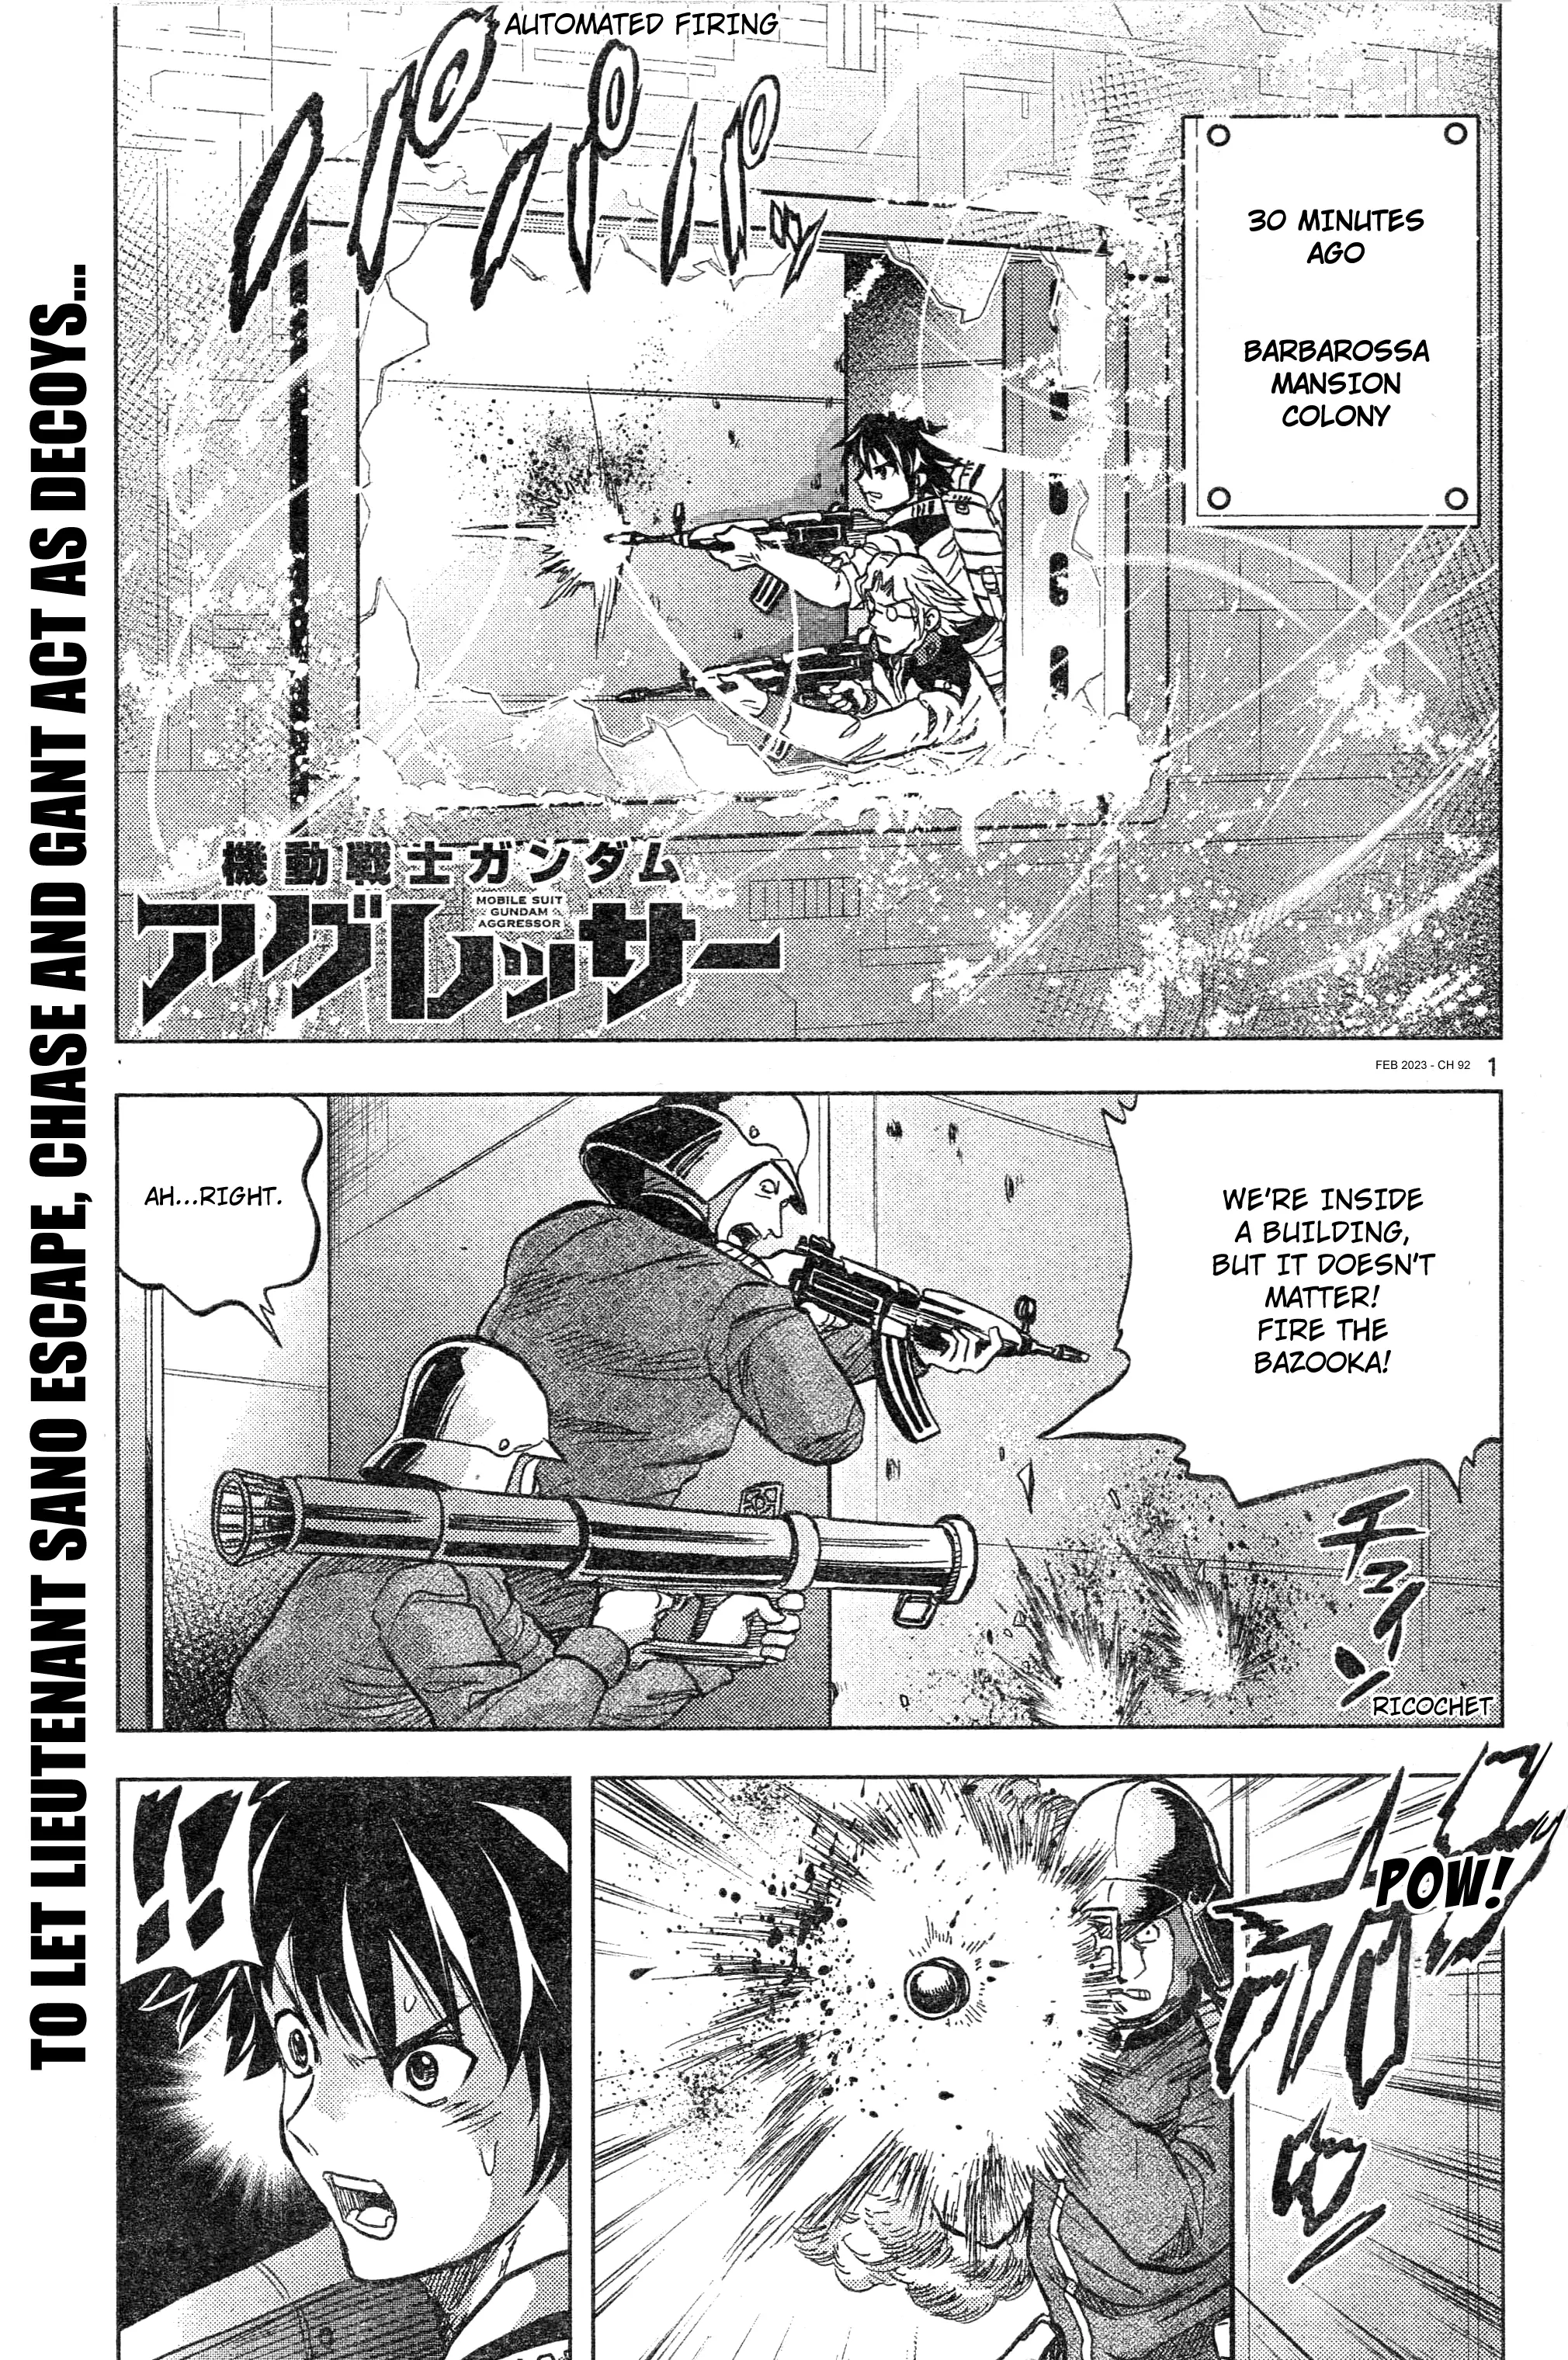 Mobile Suit Gundam Aggressor - 92 page 1-d03e6a15